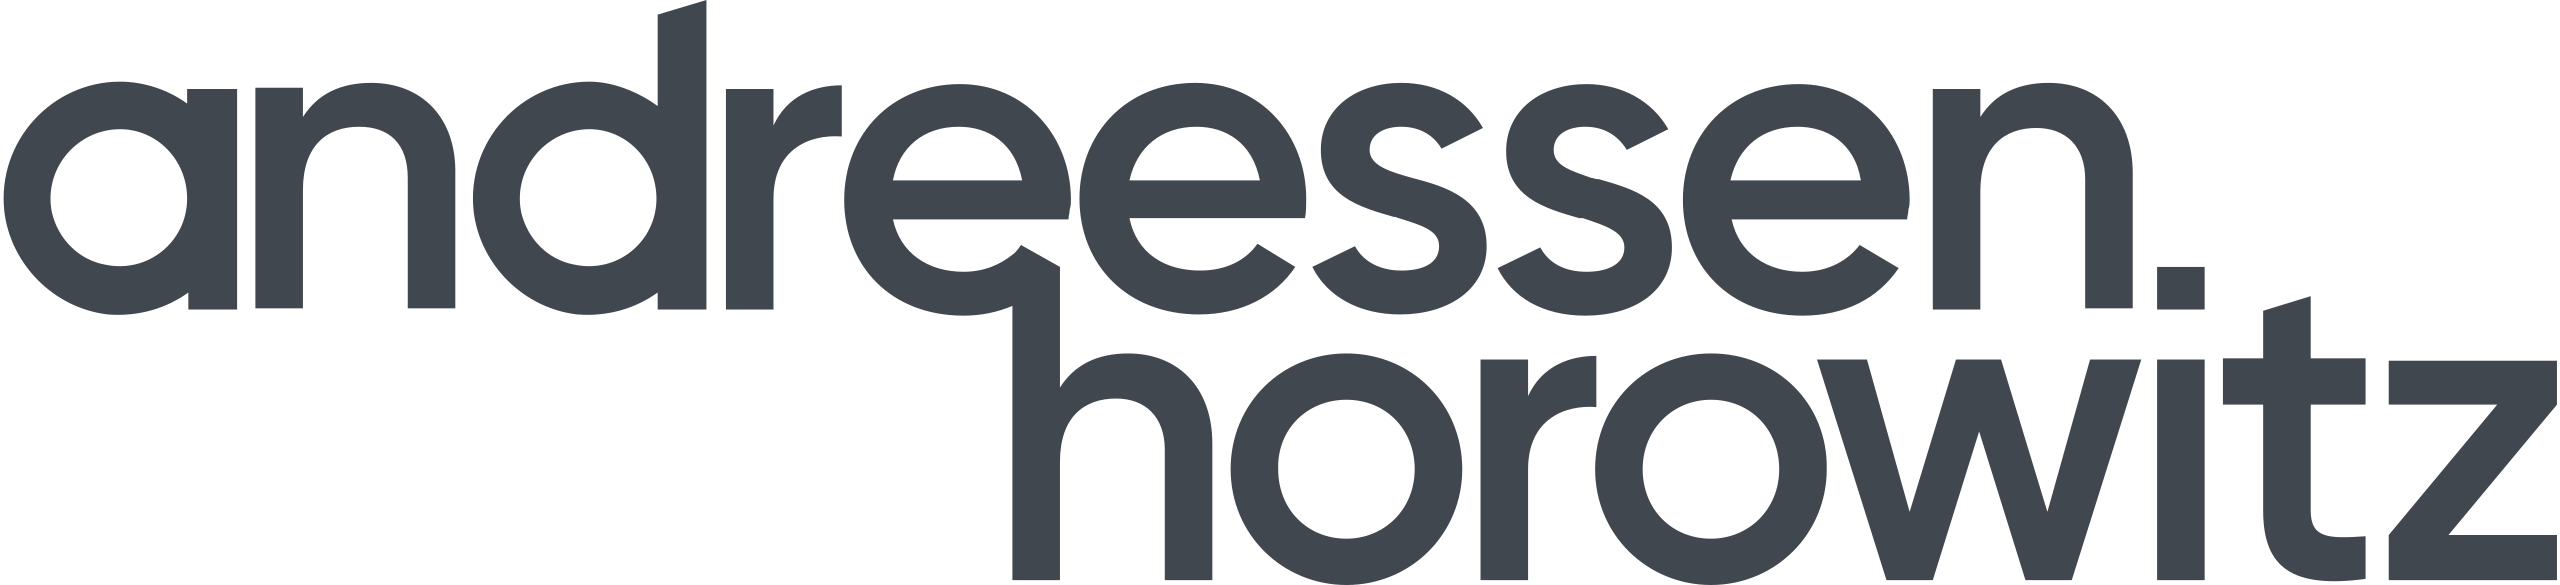 Andreessen horowitz new logo.svg